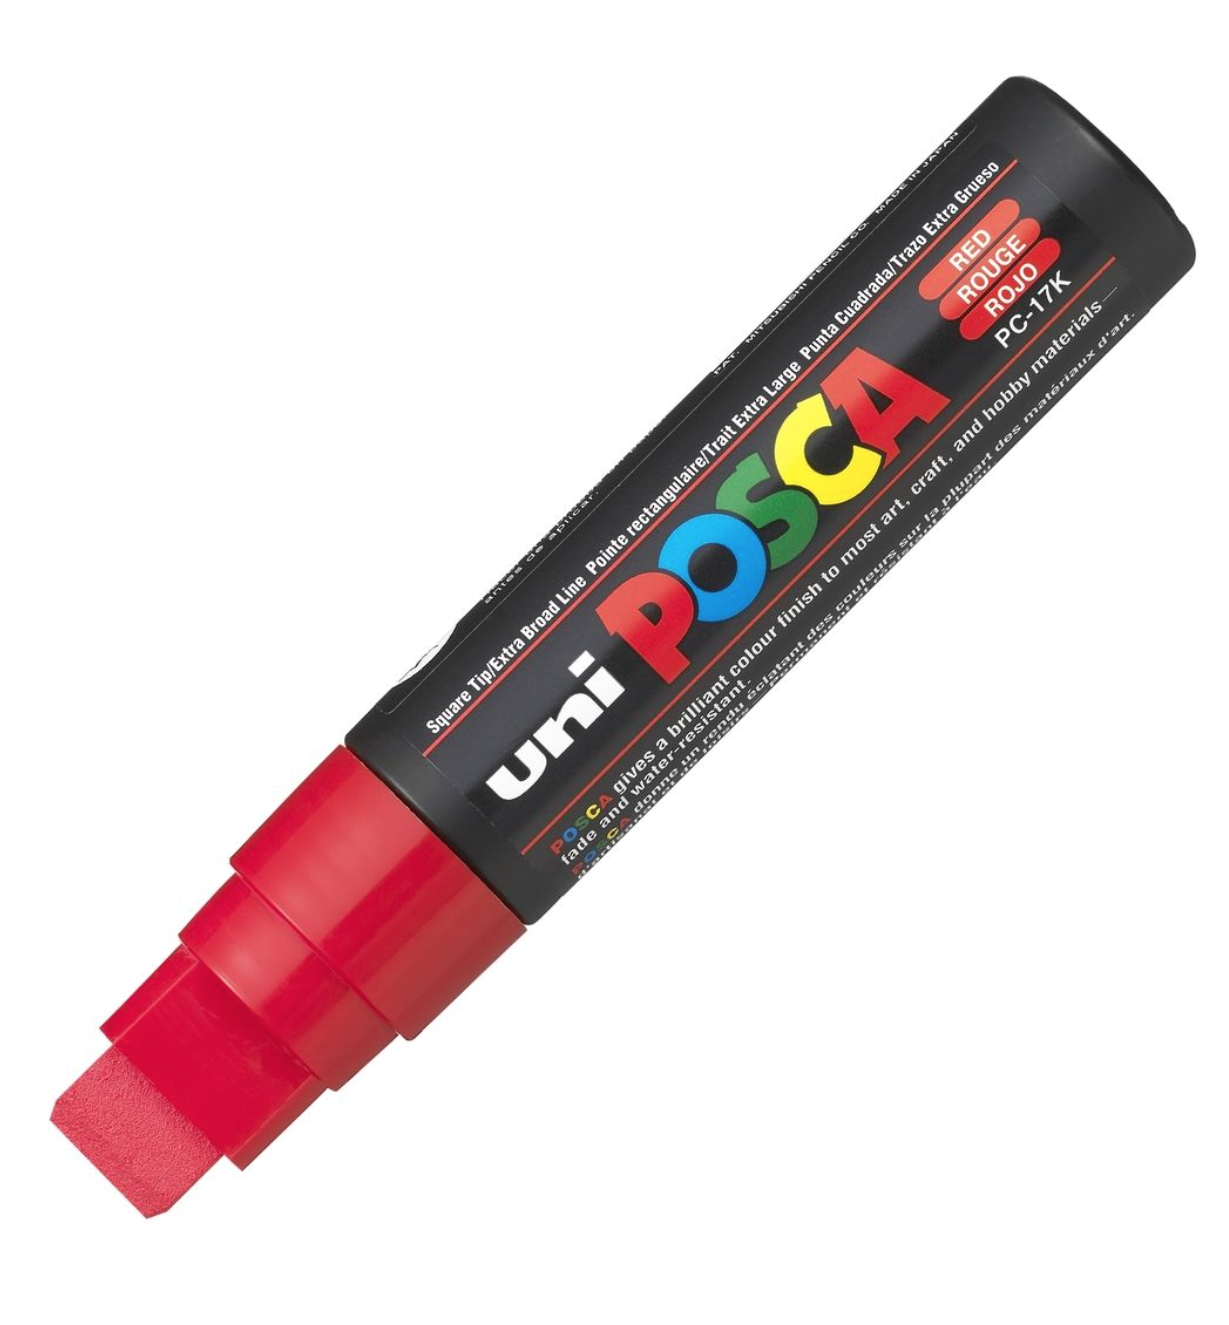 POSCA PC-17K RED MARKER ART GRAFFITI SKETCH DRAW DECORATION ARTISTE TAG SHOP PRO 4902778364215 COMASOUND KARTEL CSK ONLINE